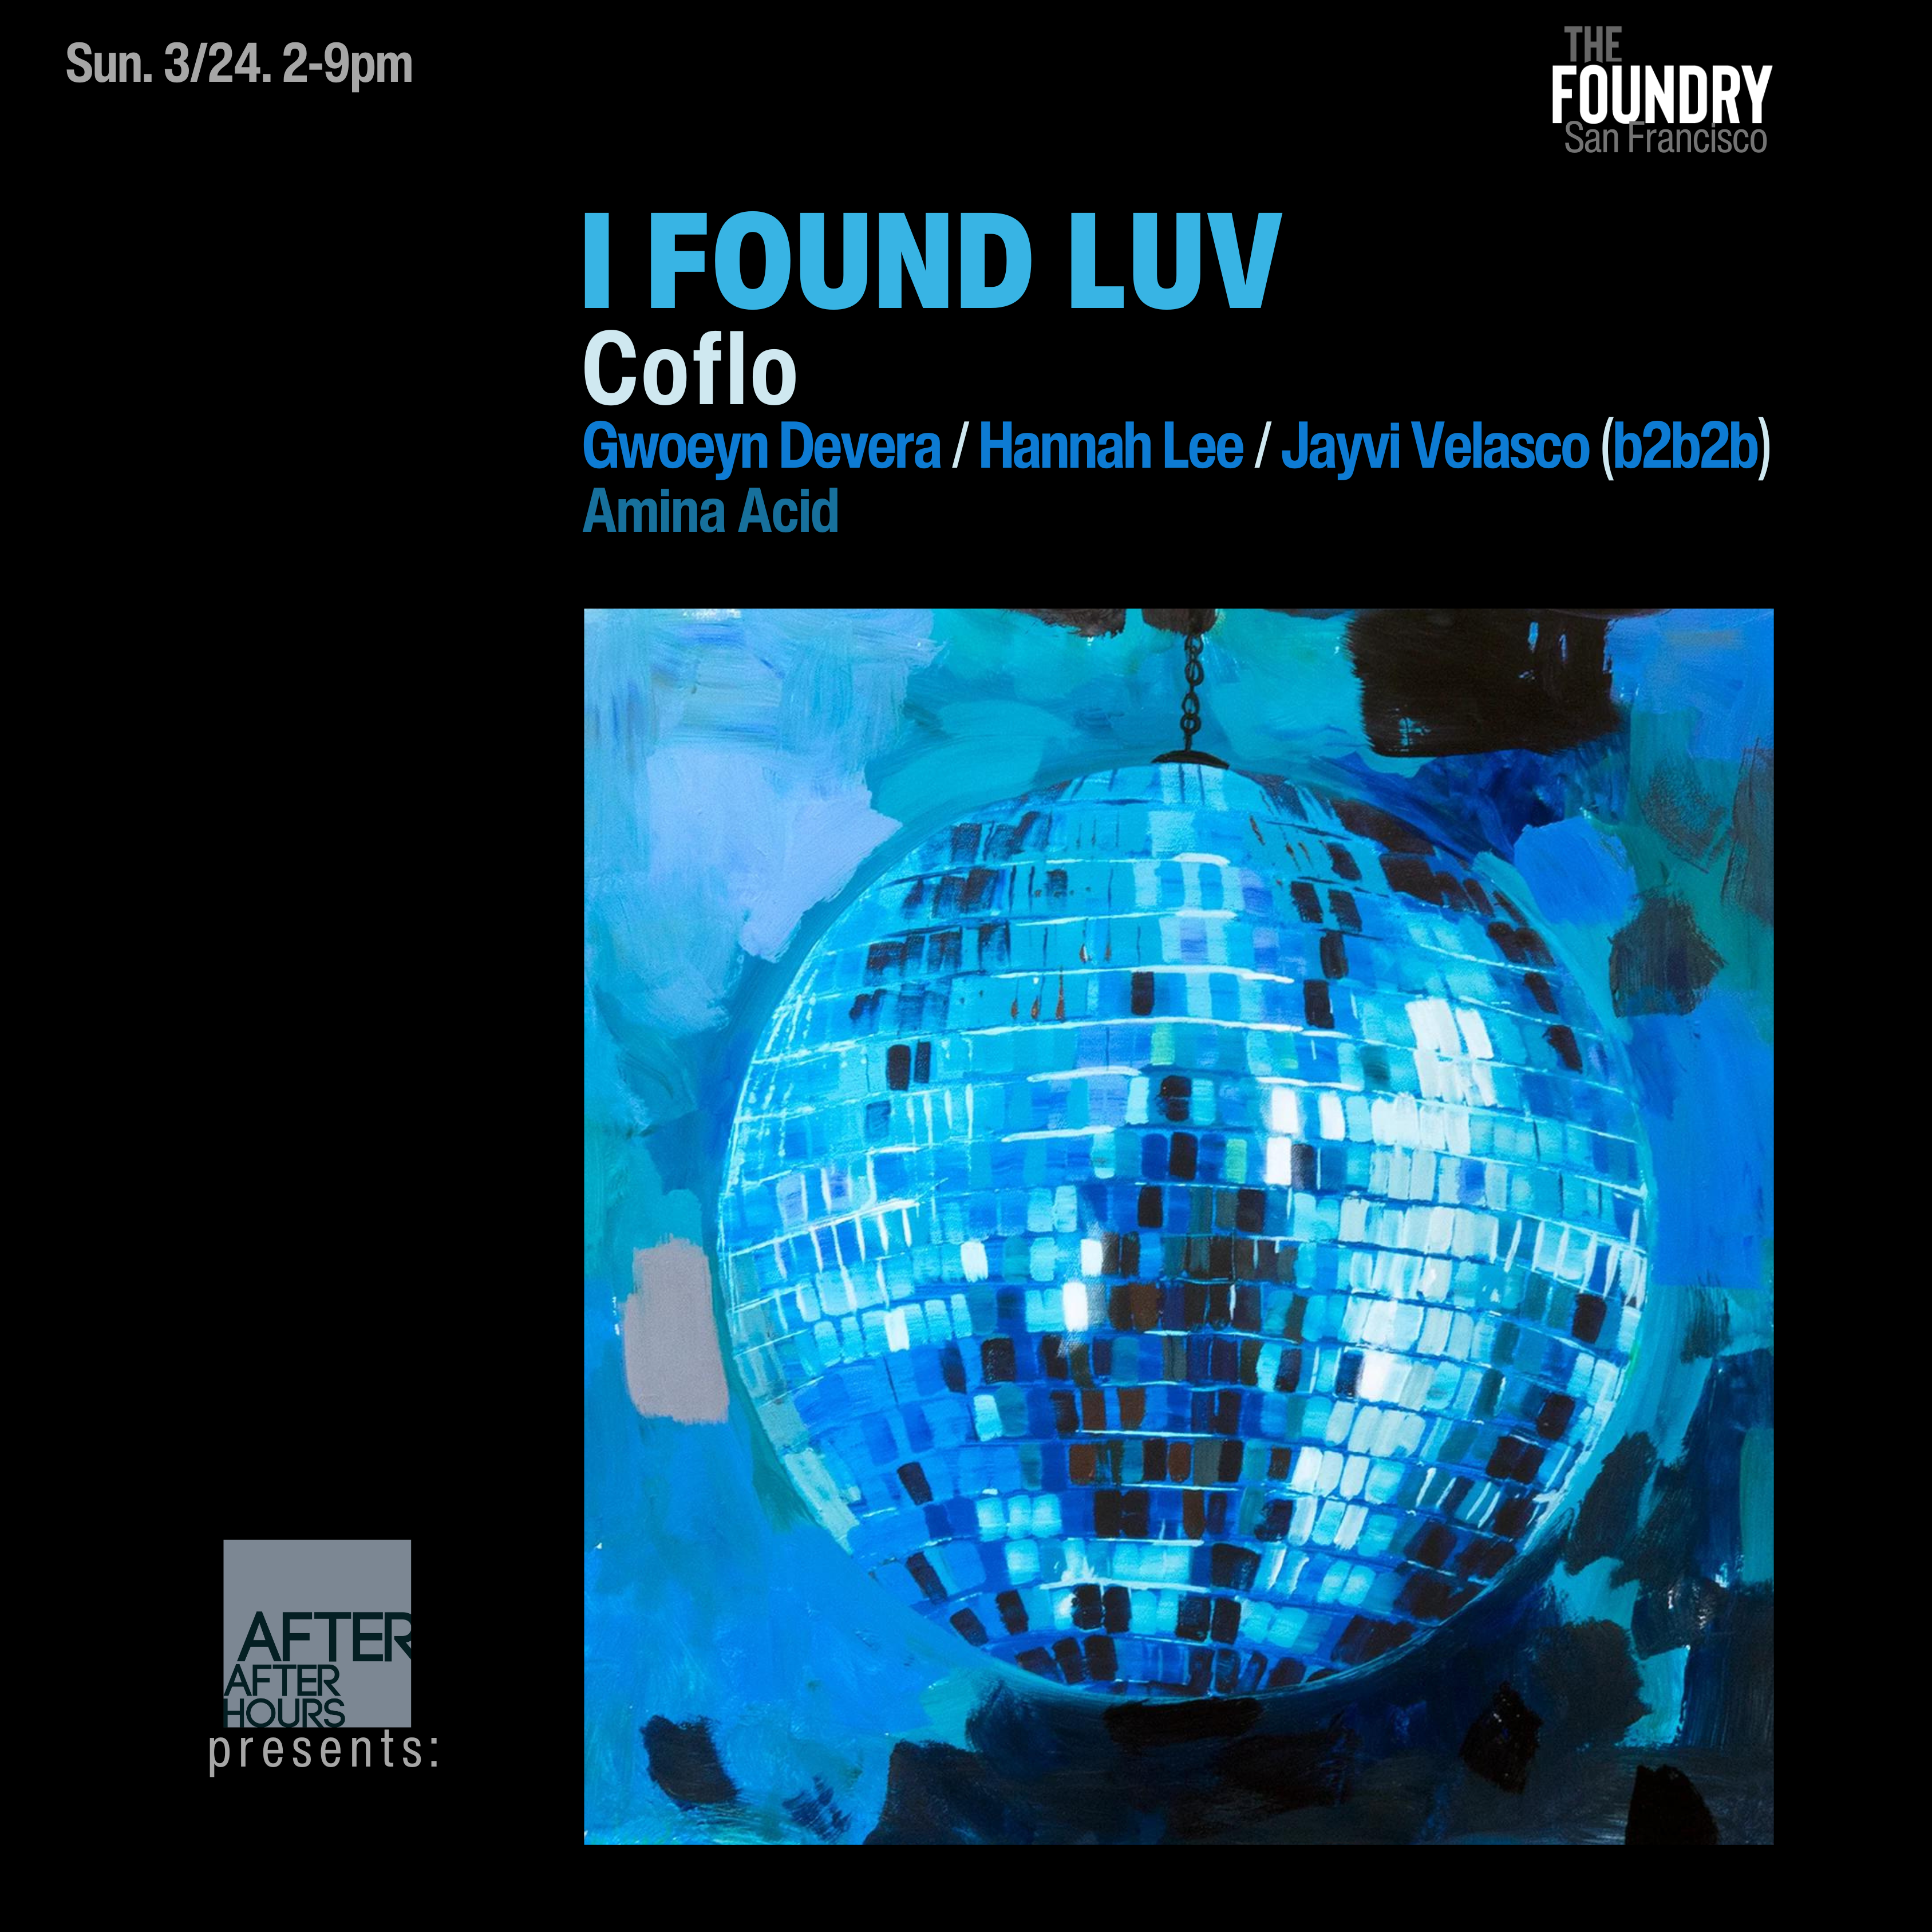 I FOUND LUV - DJs Coflo, Gwoeyn Devera, Hannah Lee, Jayvi Velasco & Amina Acid - フライヤー表